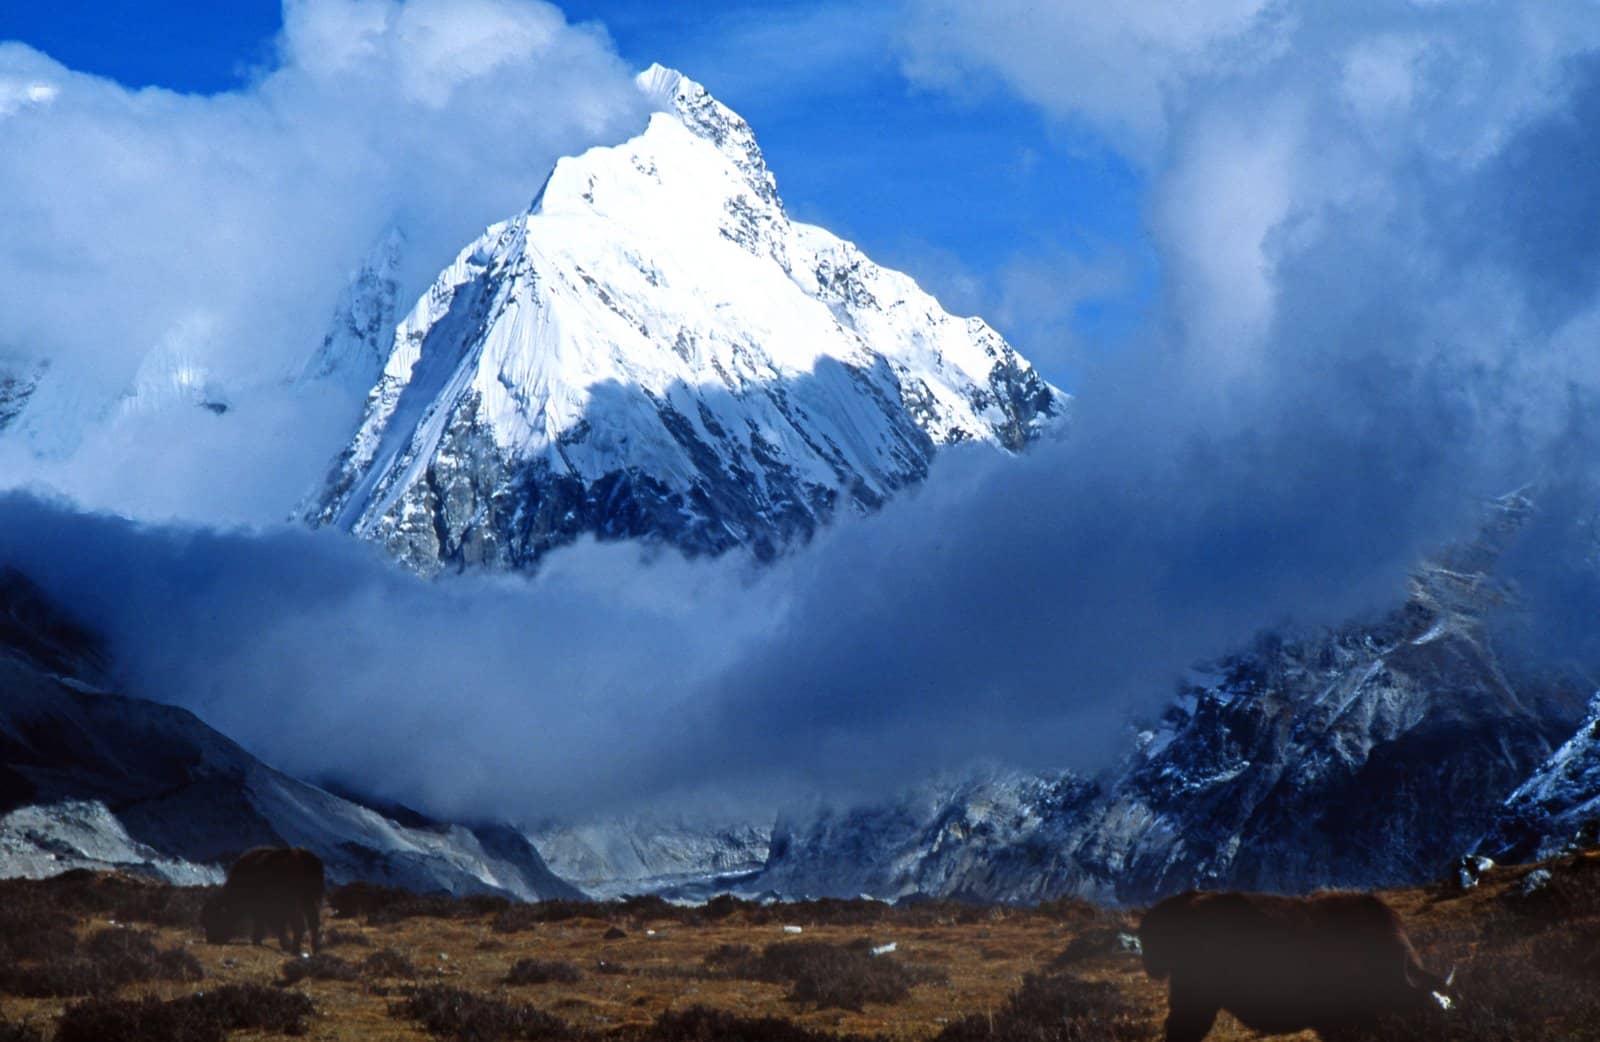 Гималаи море. Непал вершина Канченджанга. Горный массив Канченджанга. Канченджанга Гималаи 8586 метров. Канченджанга 5 вершин.